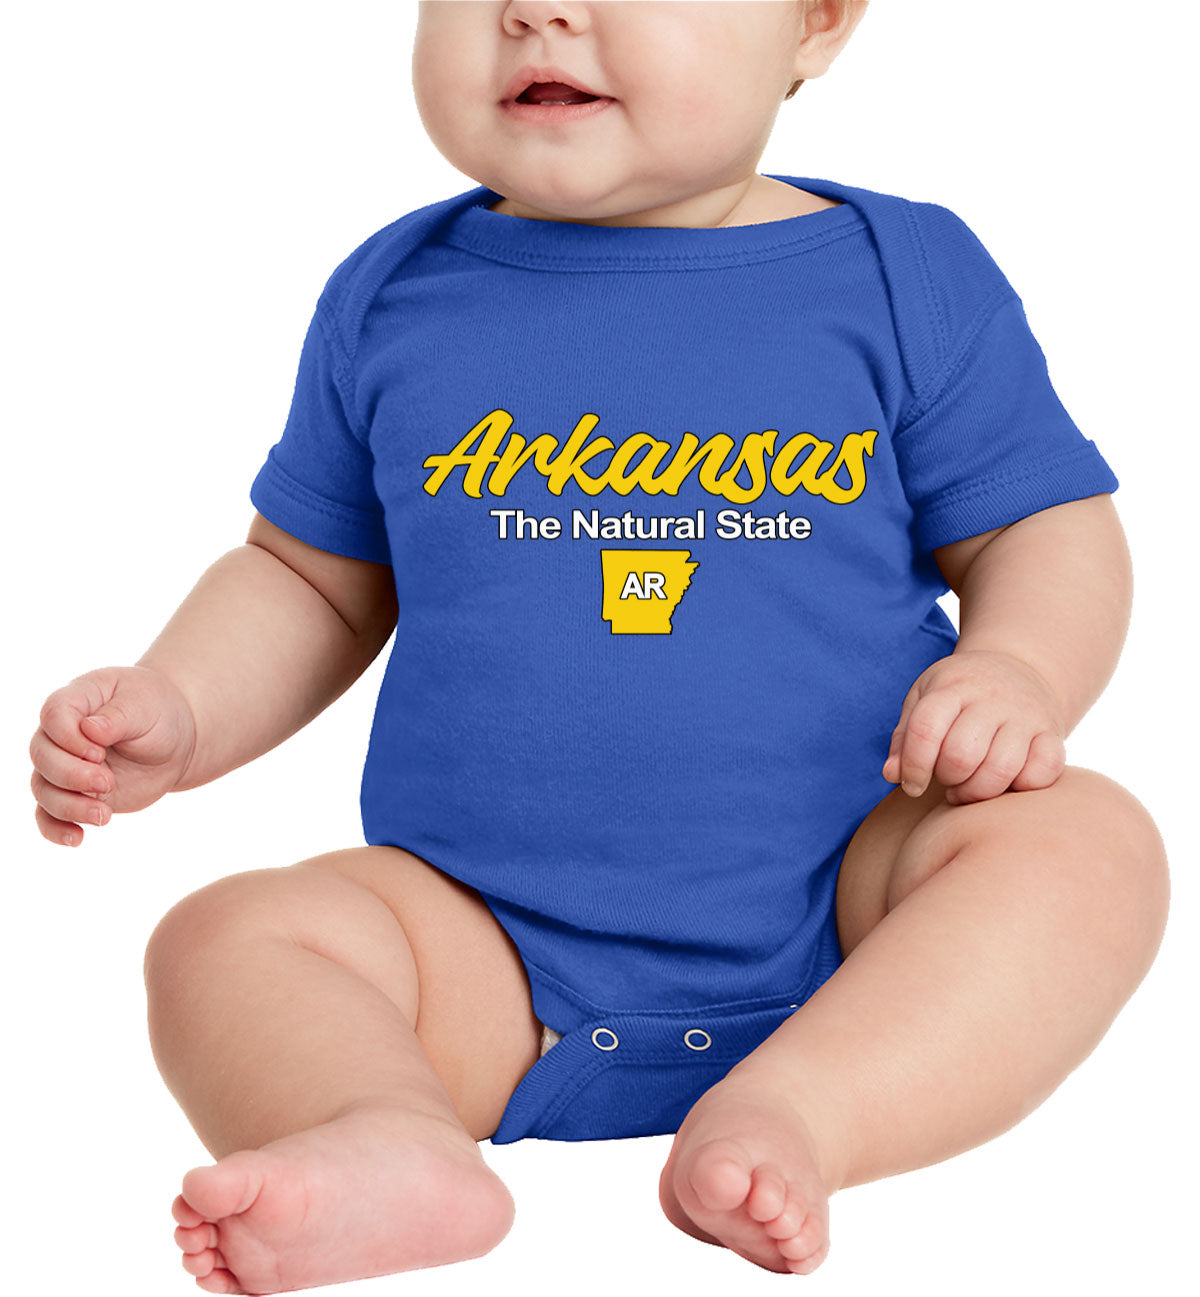 Arkansas The Natural State Baby Onesie